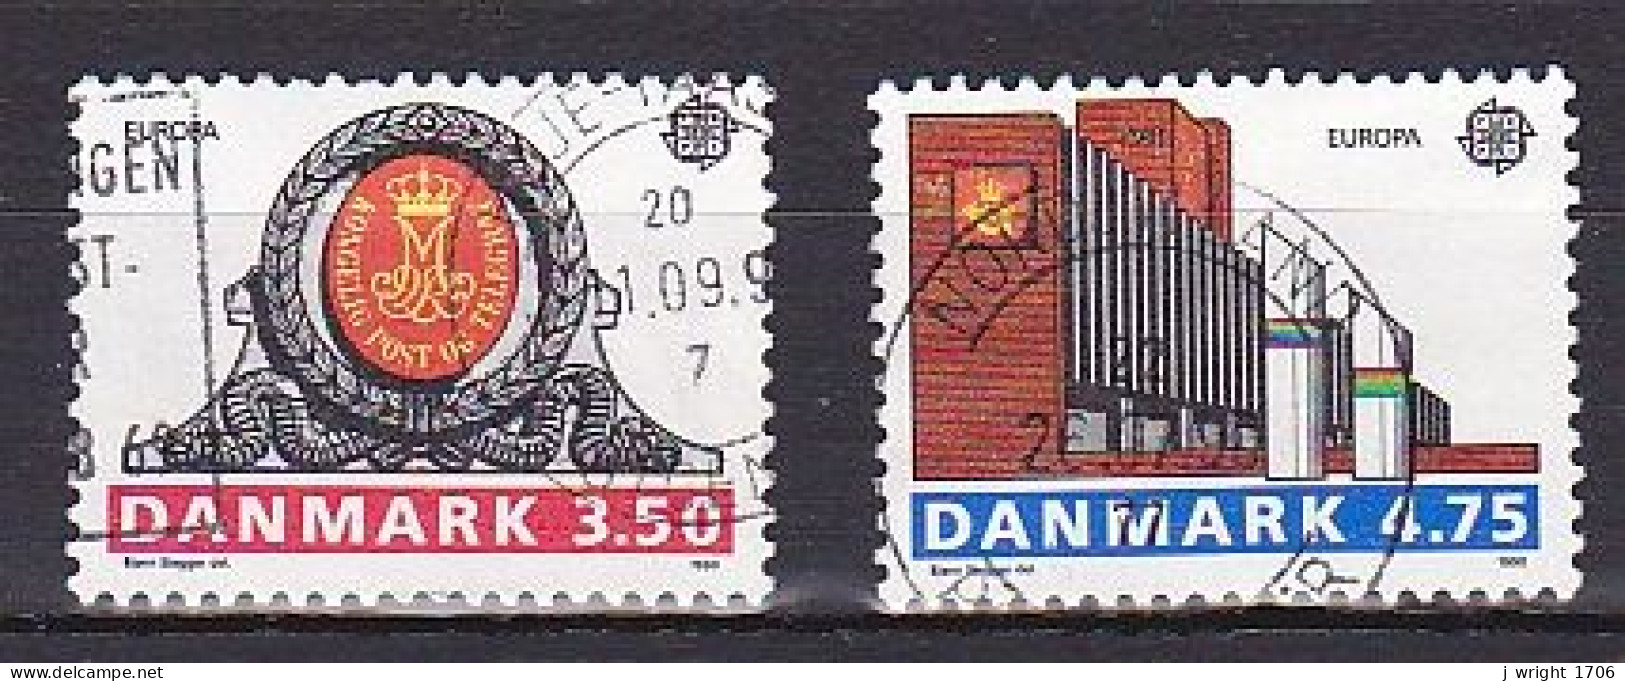 Denmark, 1990, Europa CEPT, Set, USED - Usati